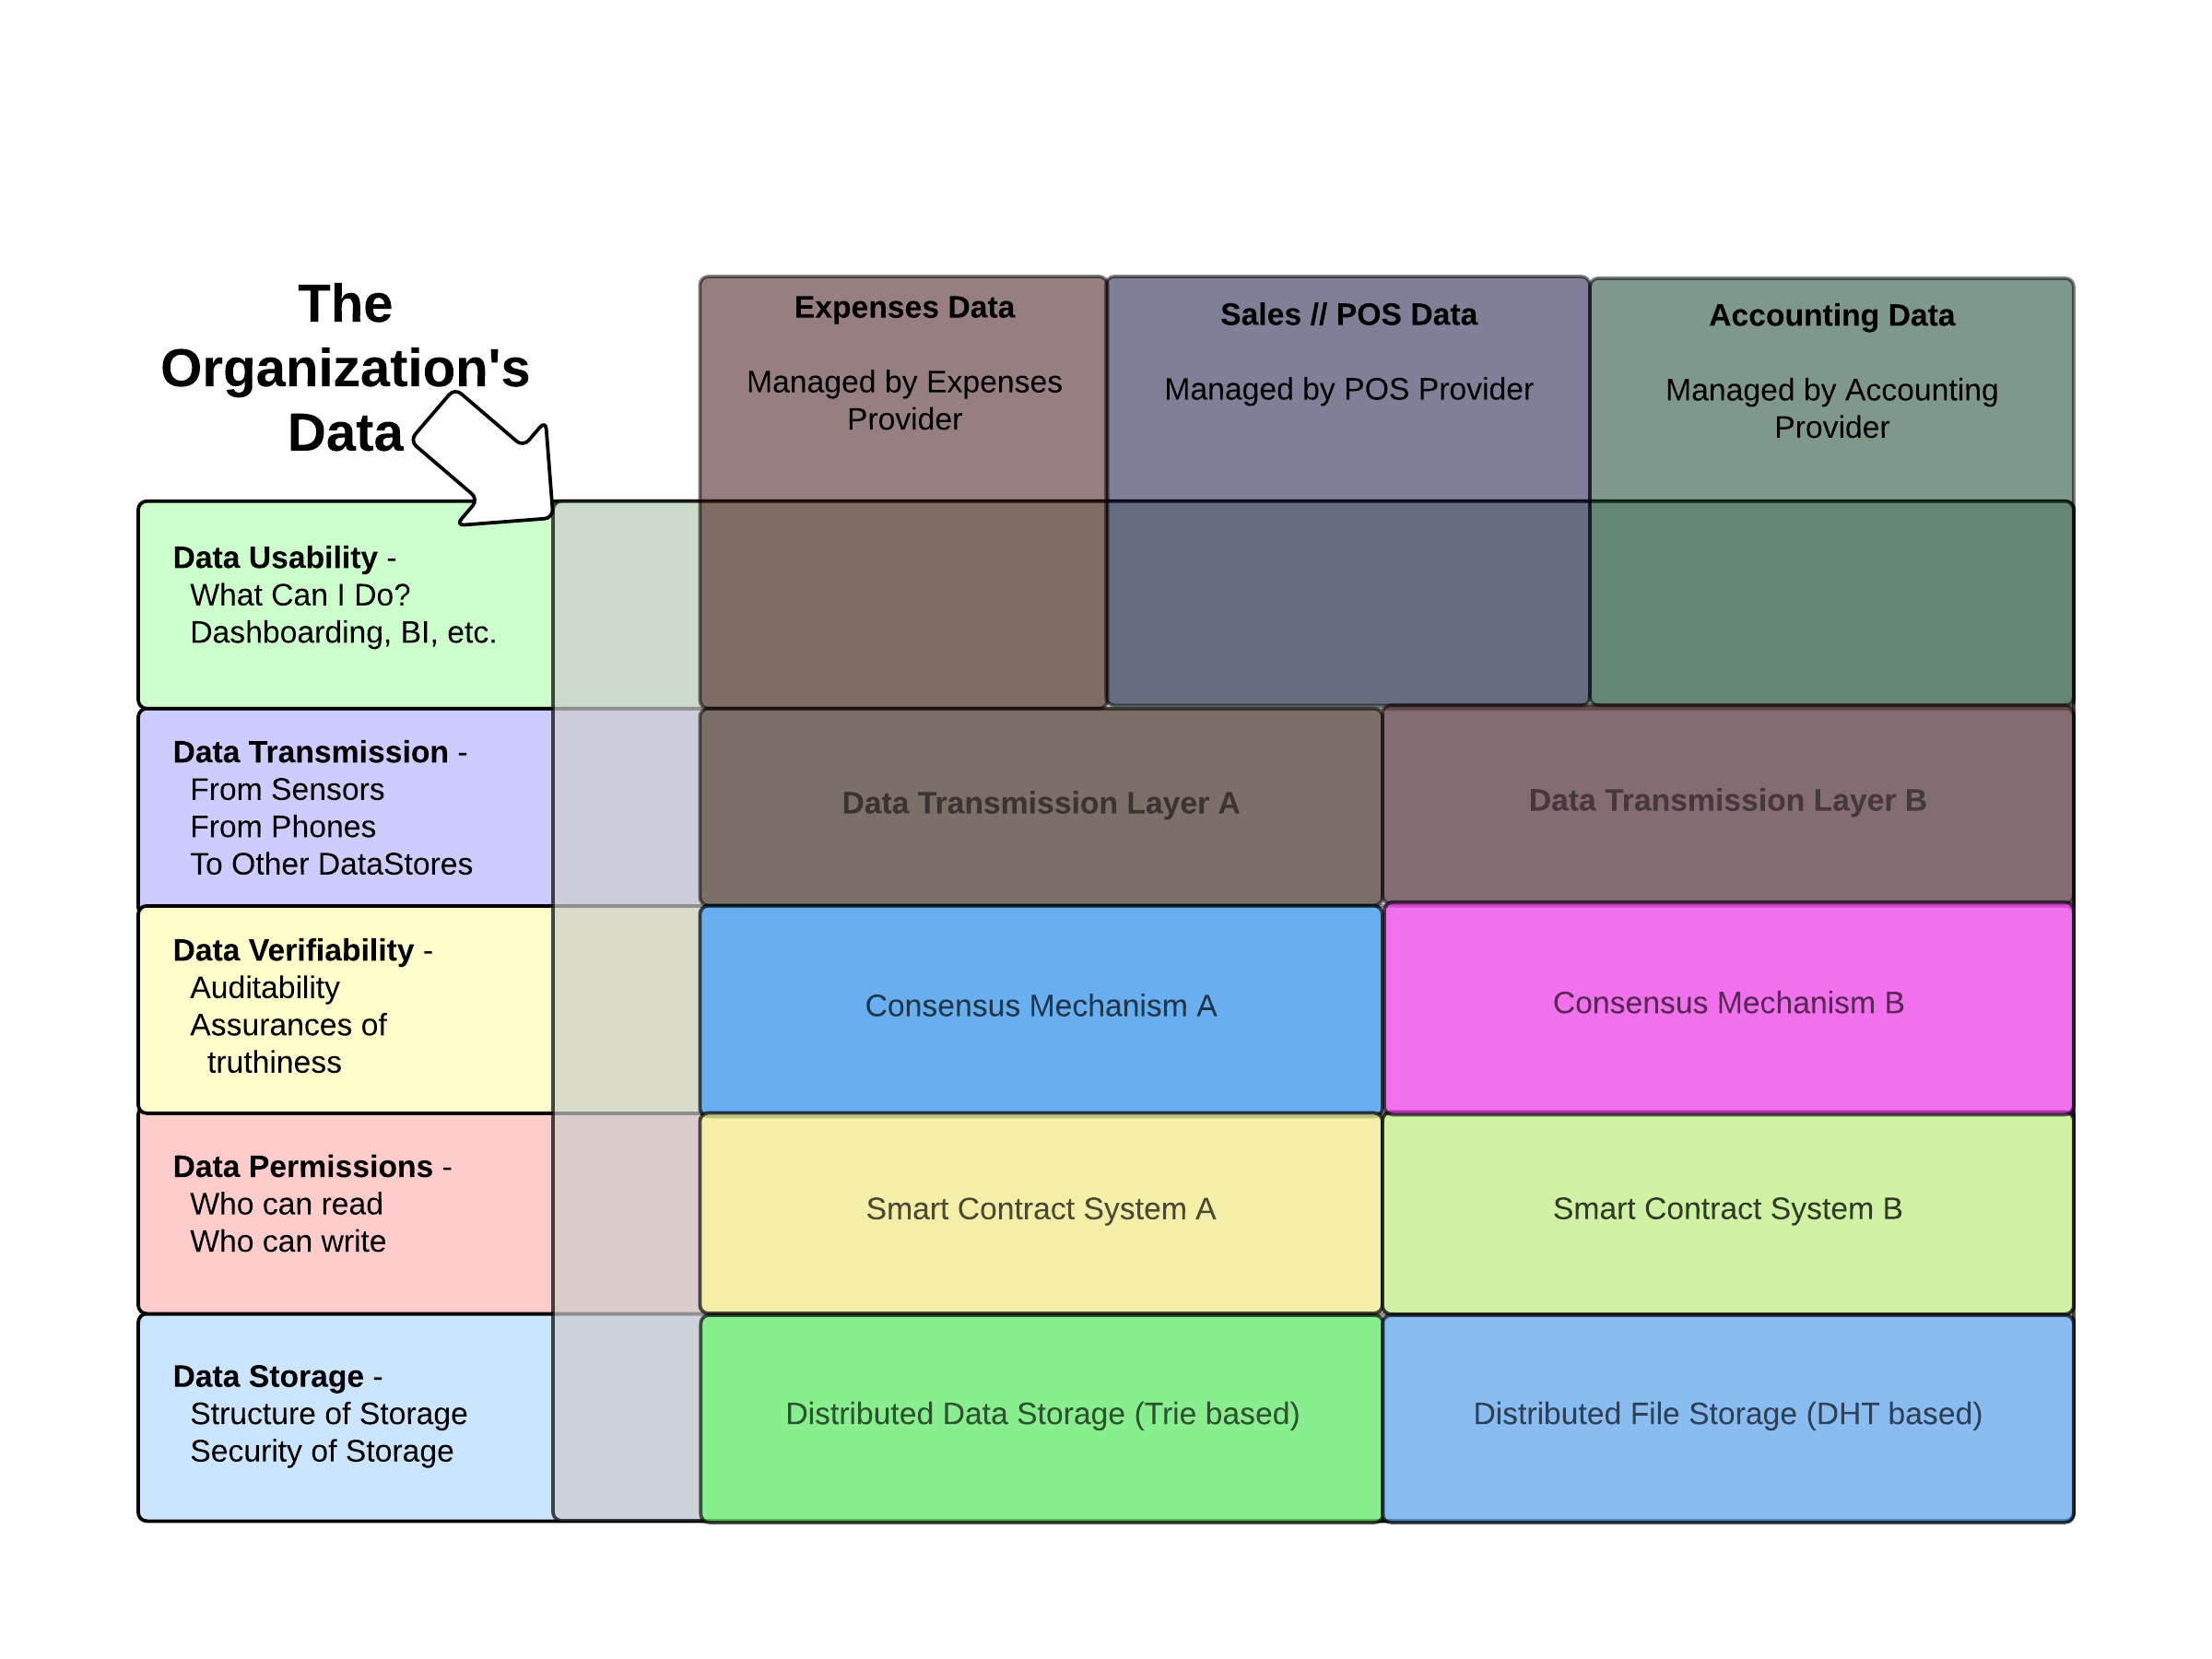 The Organization's Data Chart